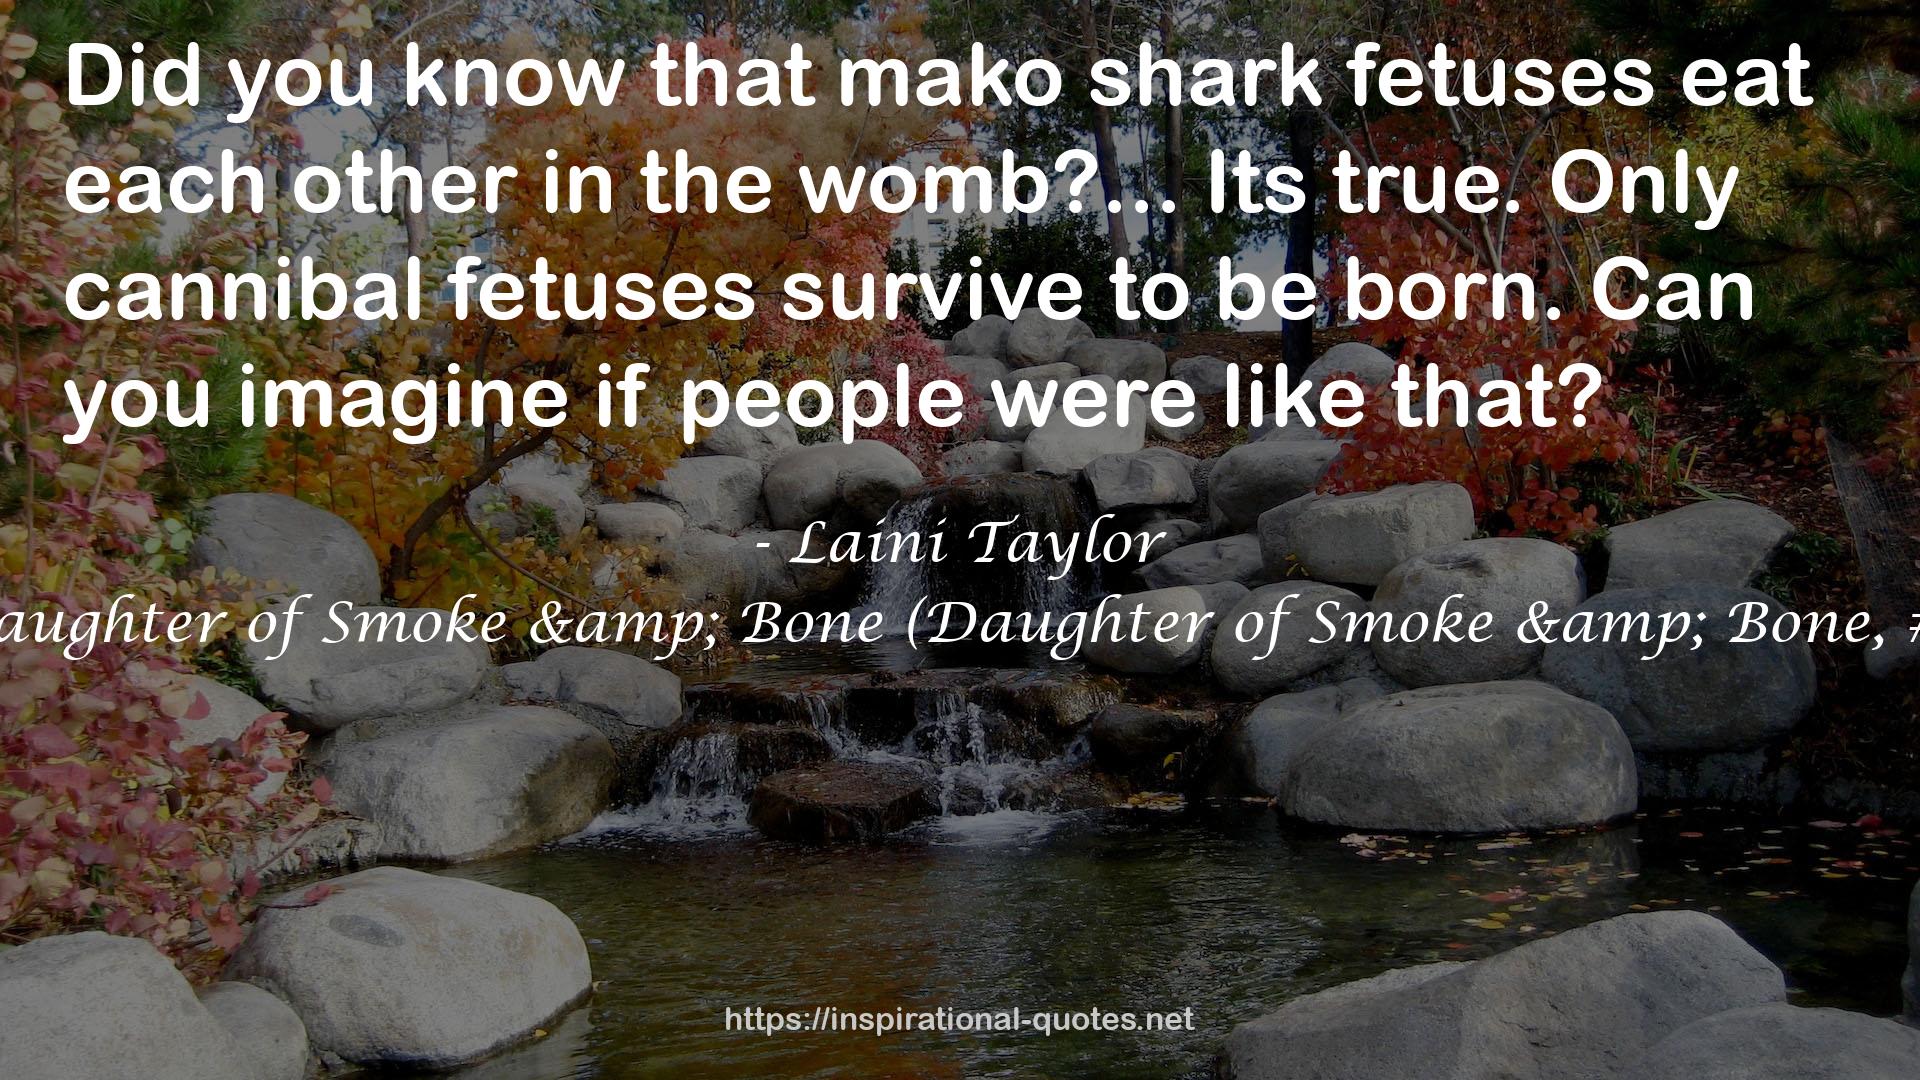 mako shark fetuses  QUOTES